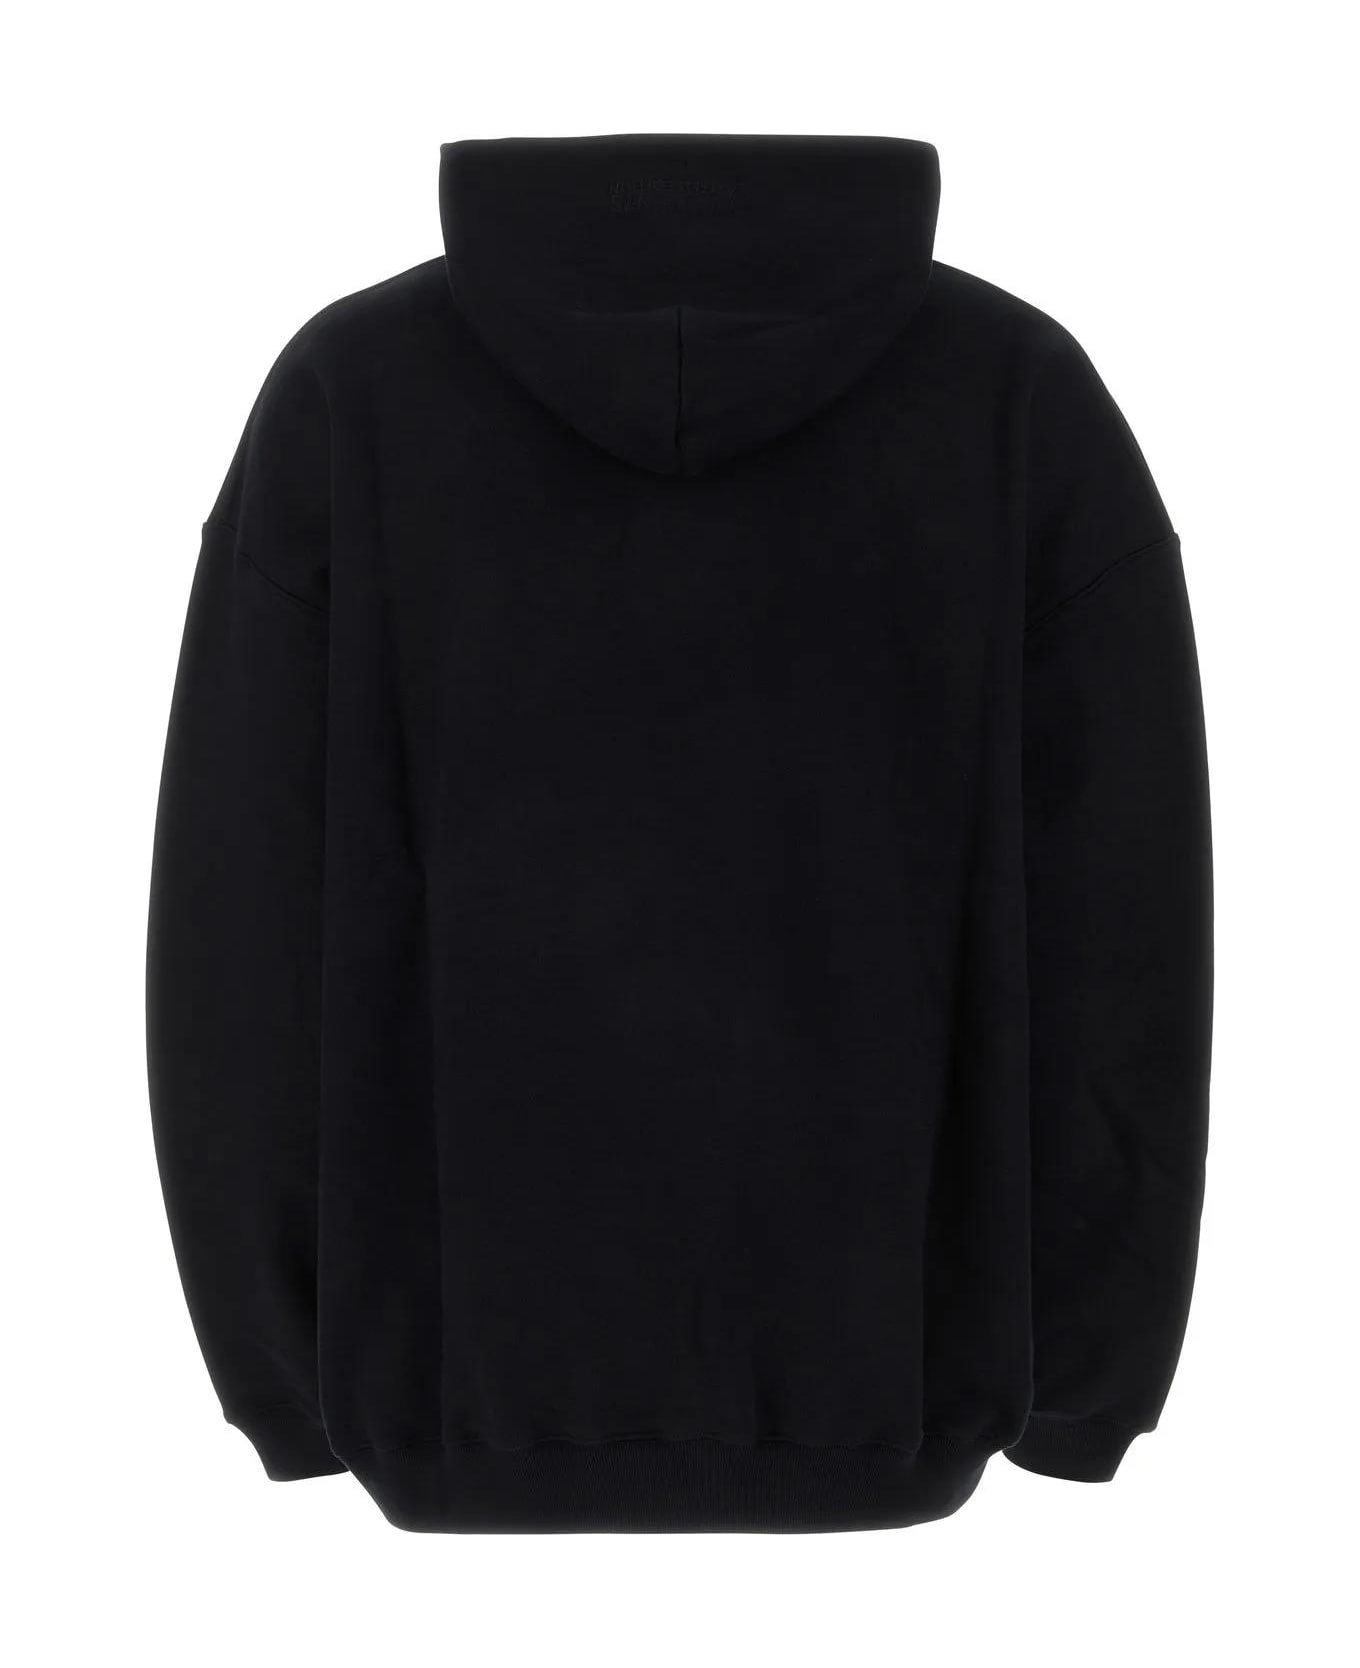 VETEMENTS Black Cotton Blend Oversize Sweatshirt - Black